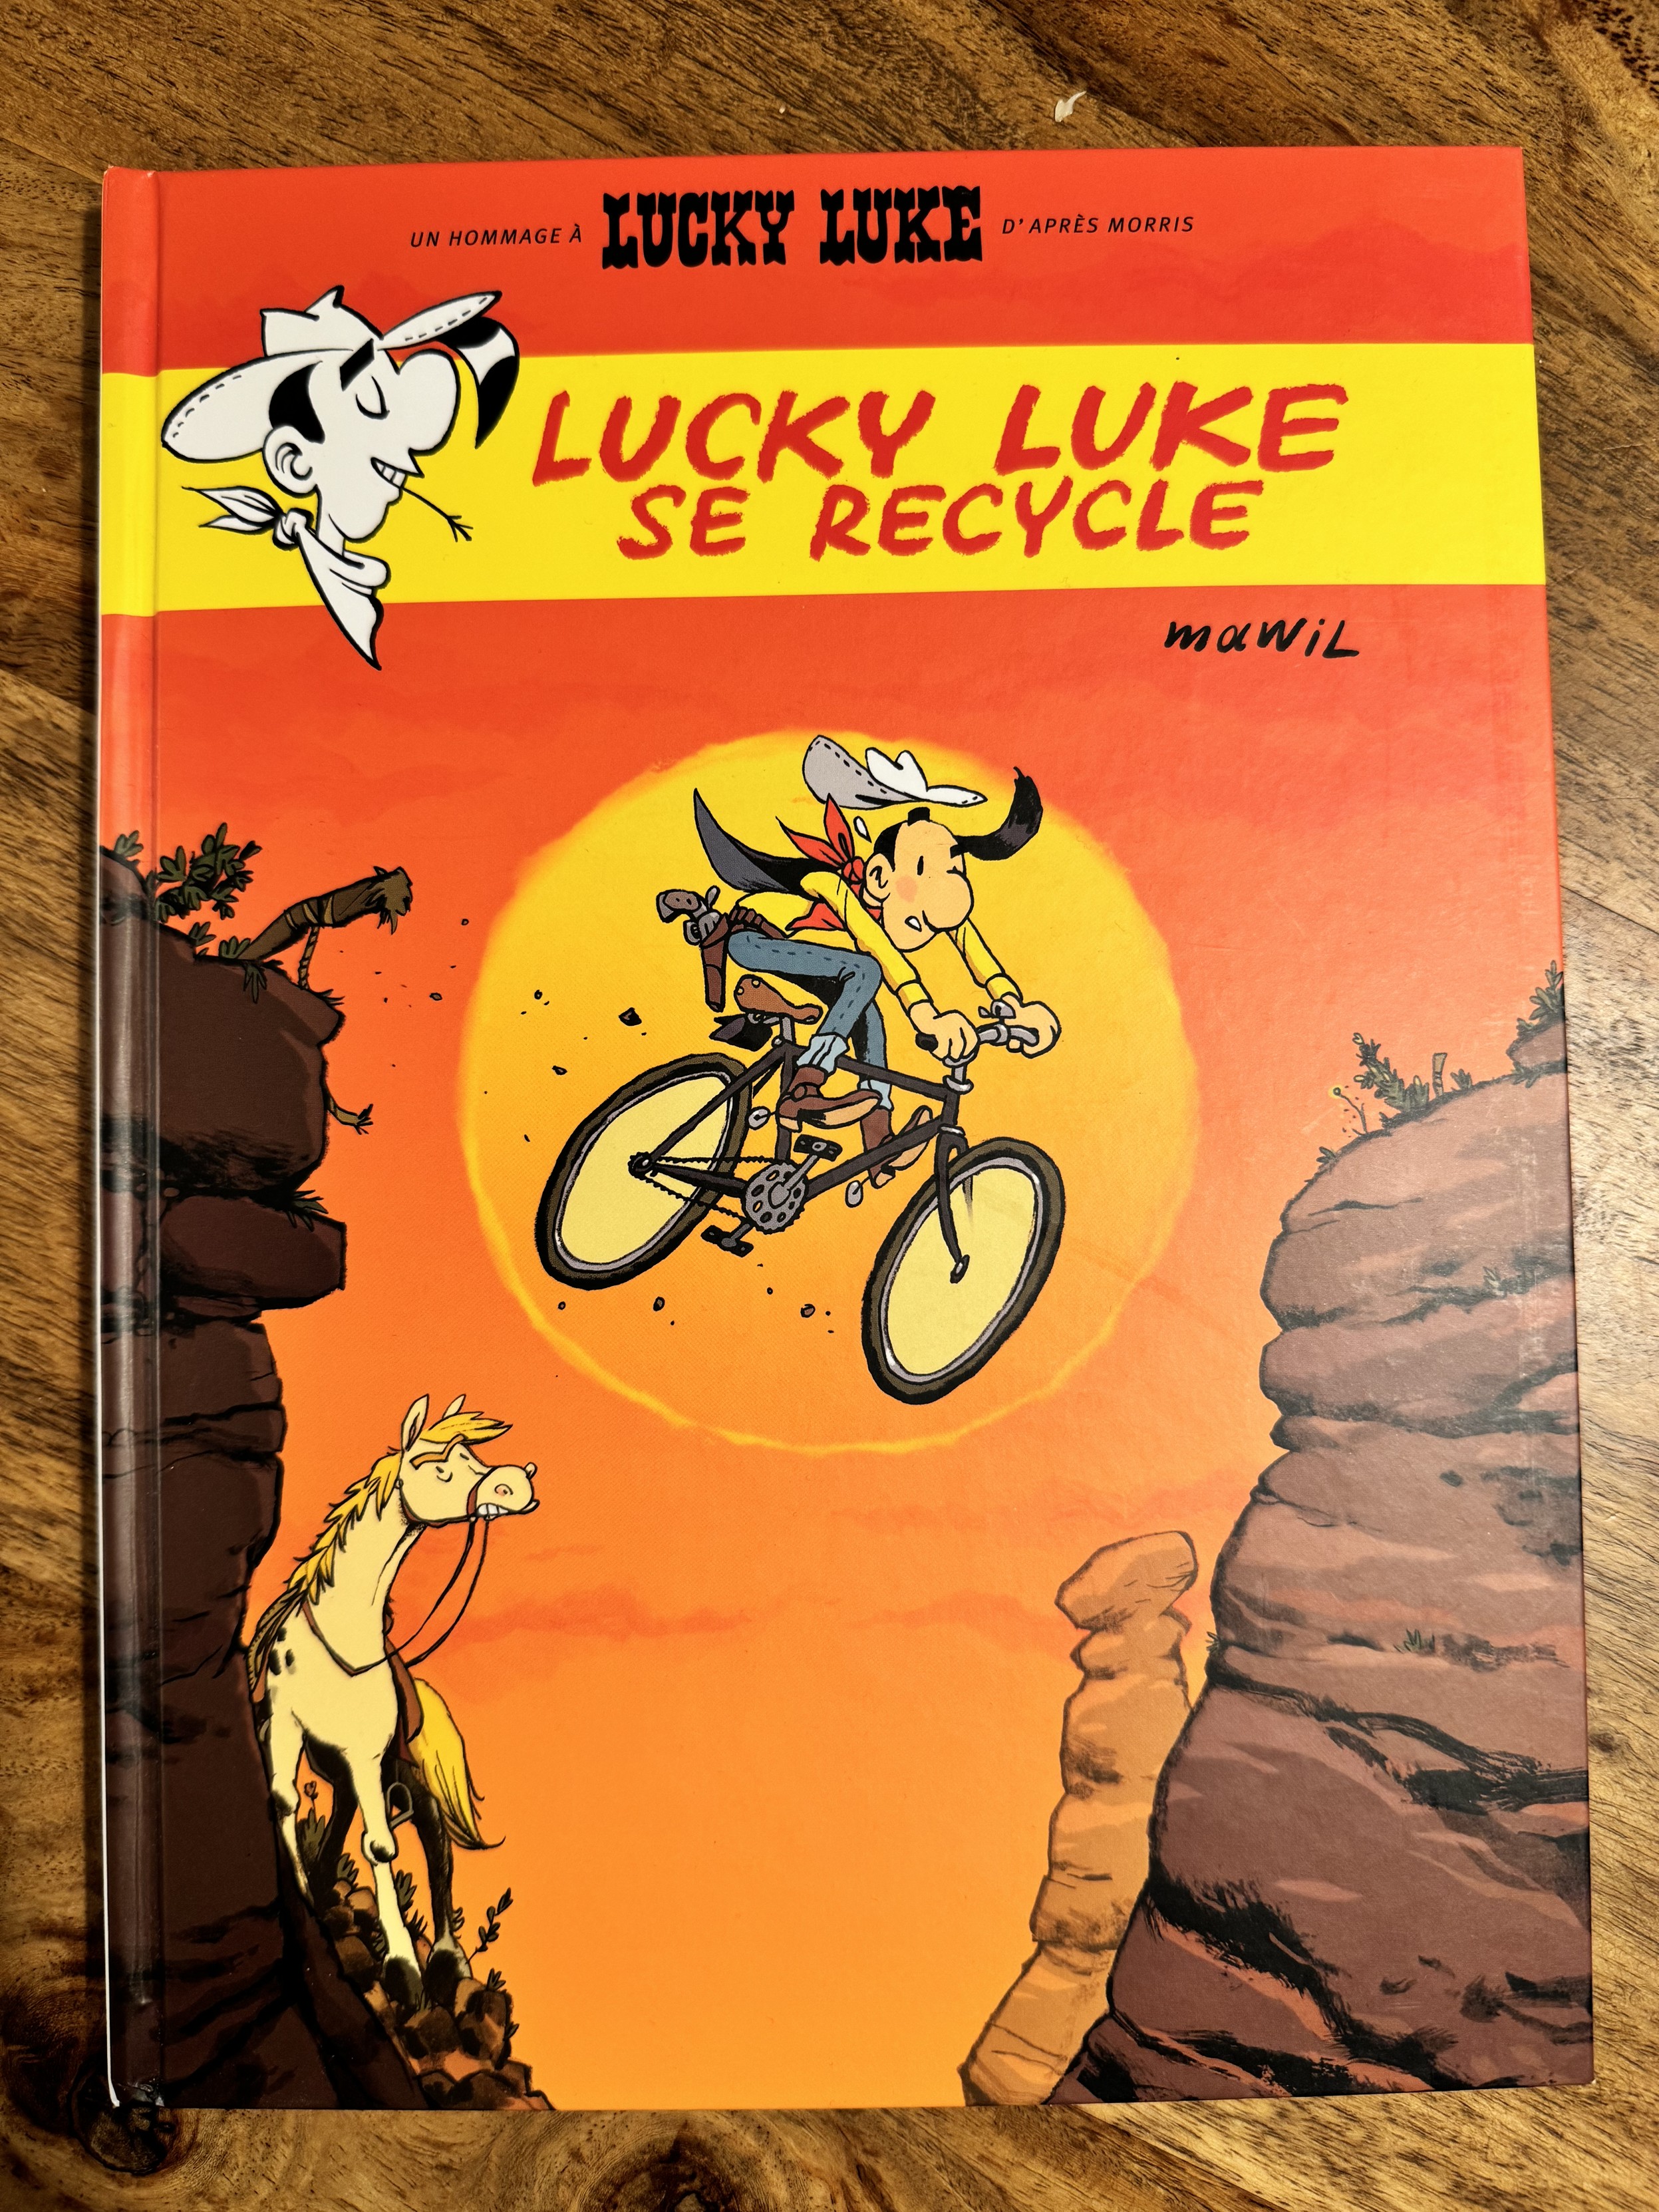 Jour 18 : Selle 🐎 🚲 - <a href='https://mamot.fr/@zemoko/111257739688292716'>Lucky Luke se recycle</a> de Mawil